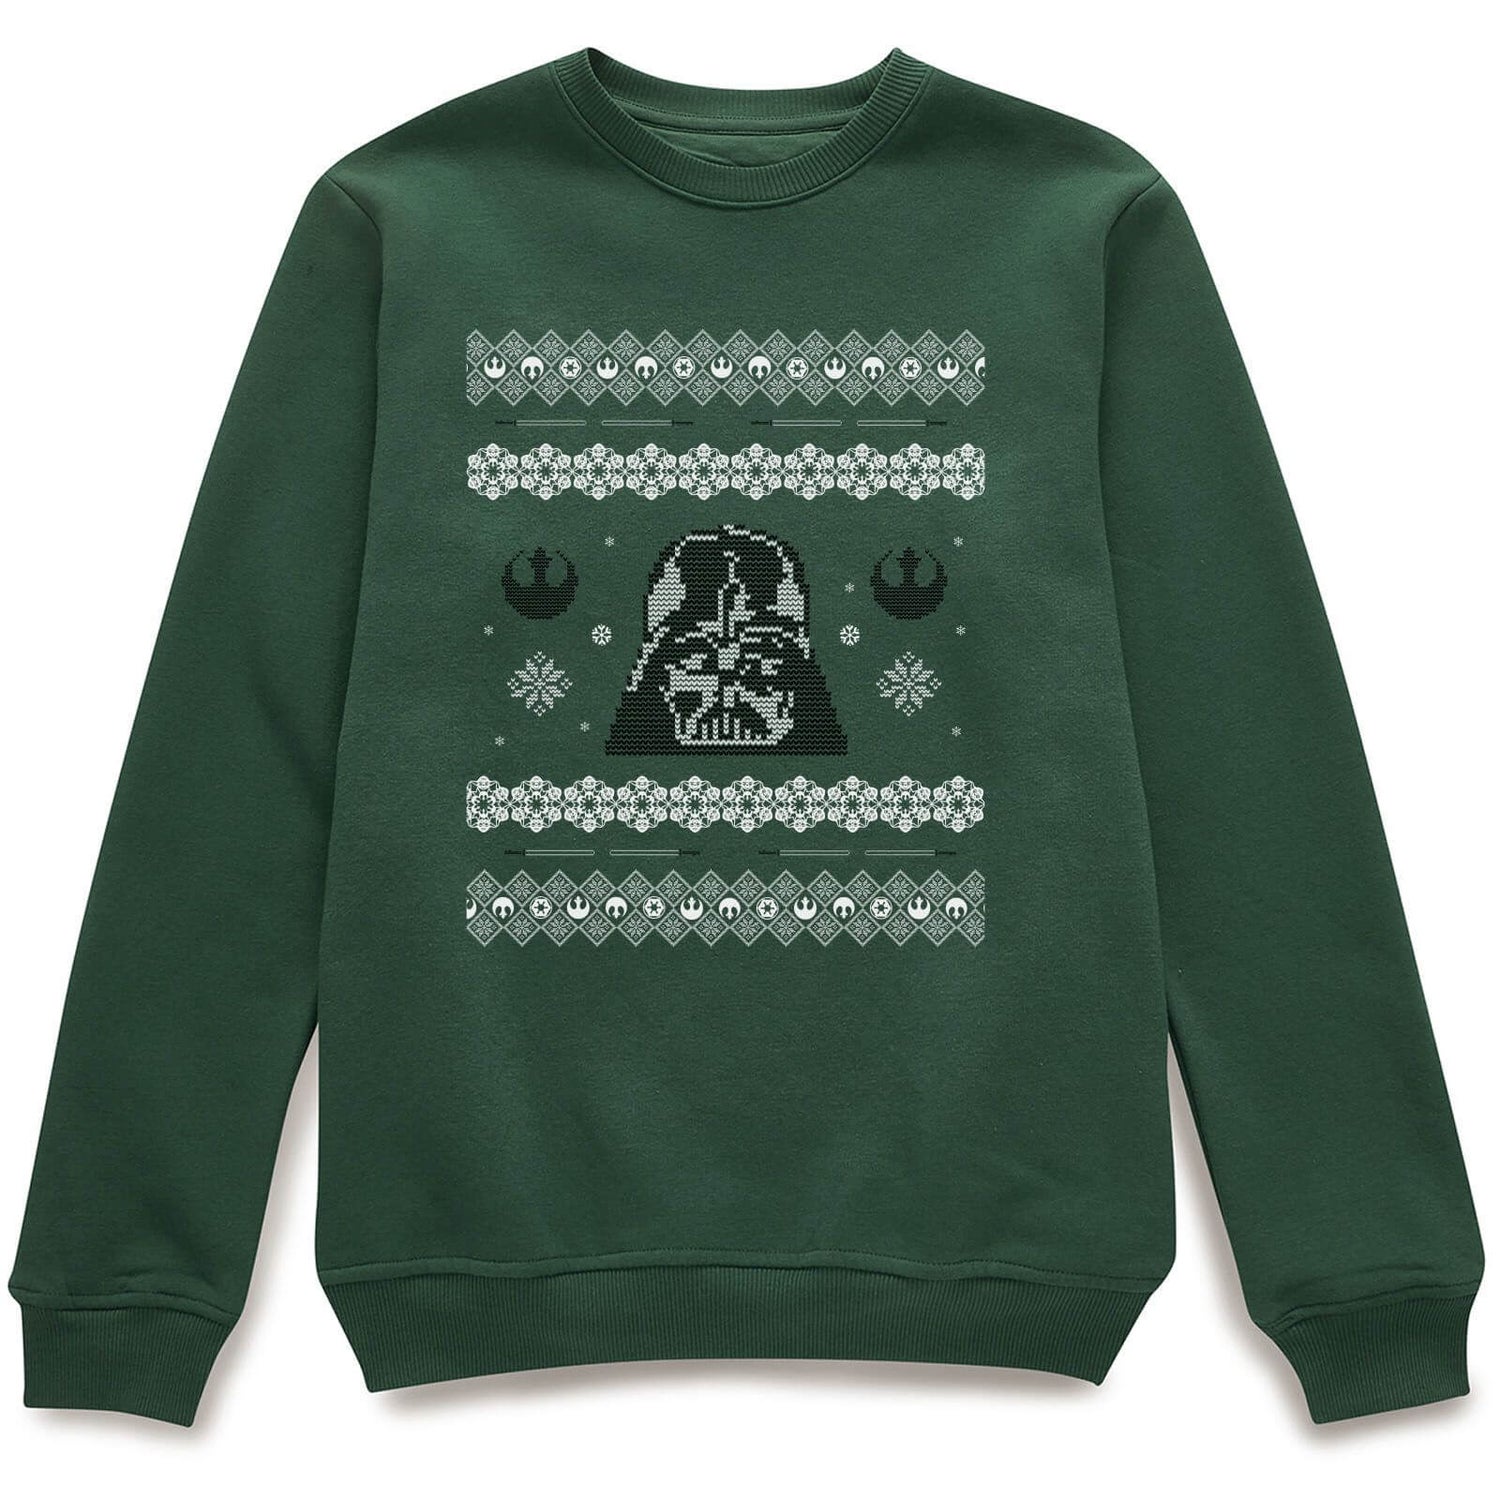 Star Wars Darth Vader Christmas Weihnachtspullover - Grün